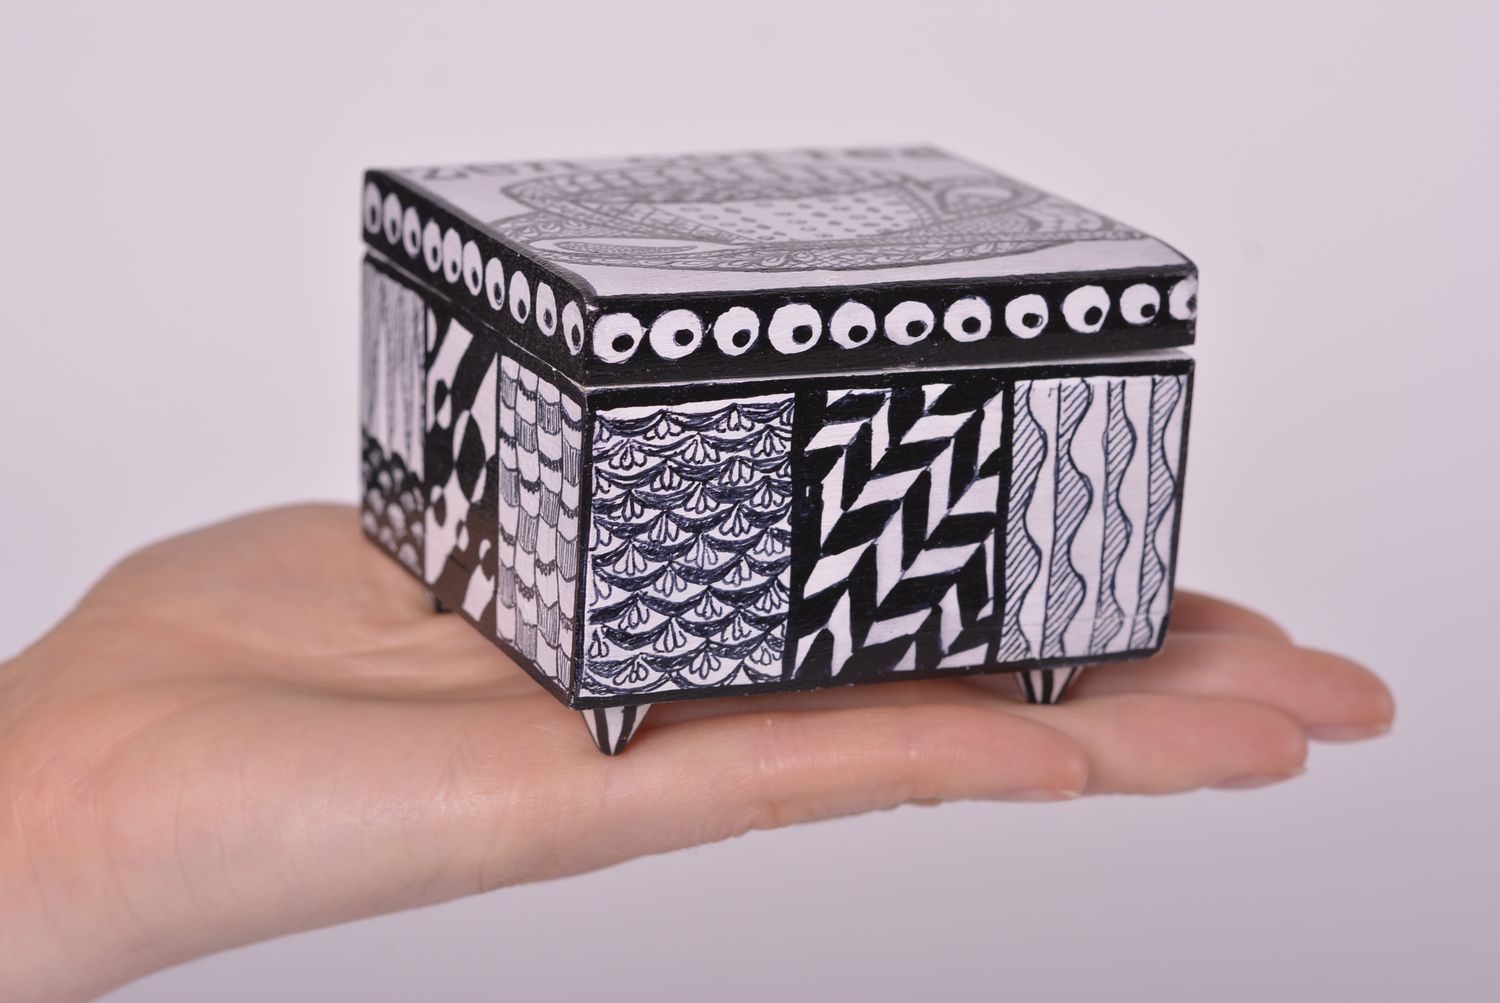 Unusual handmade wooden box jewelry box design home goods room decor ideas photo 4